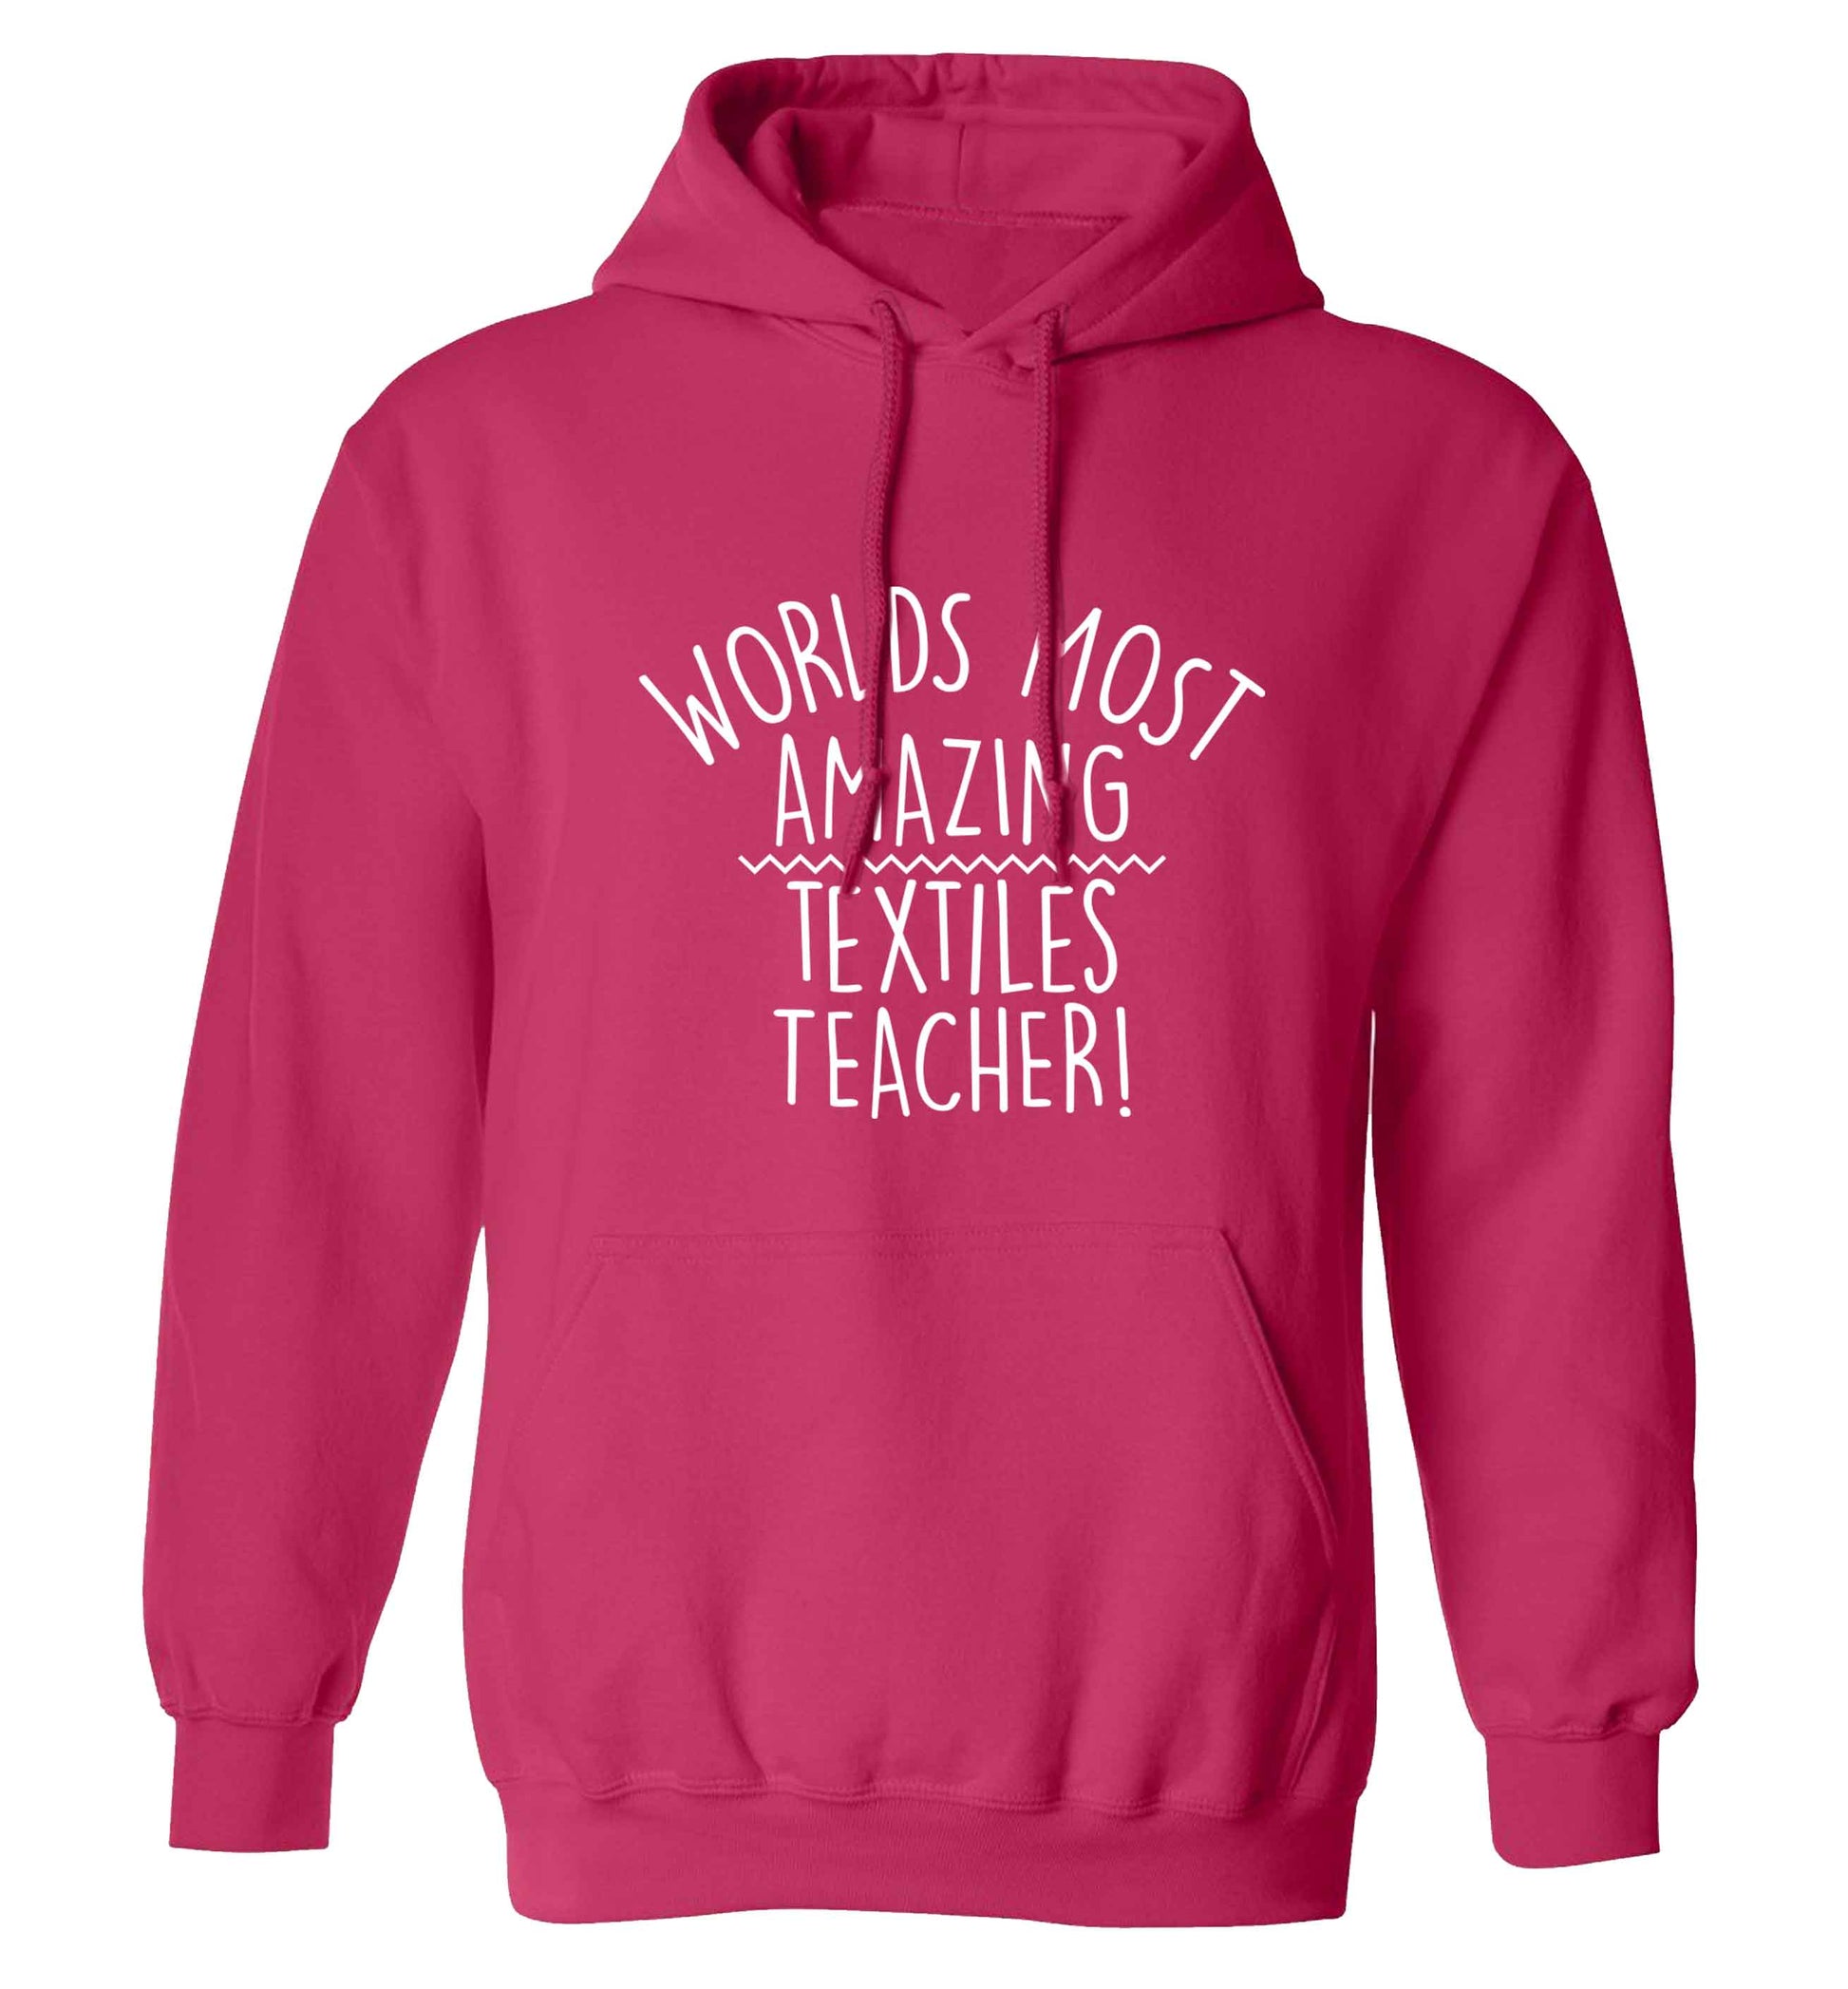 Worlds most amazing textiles teacher adults unisex pink hoodie 2XL